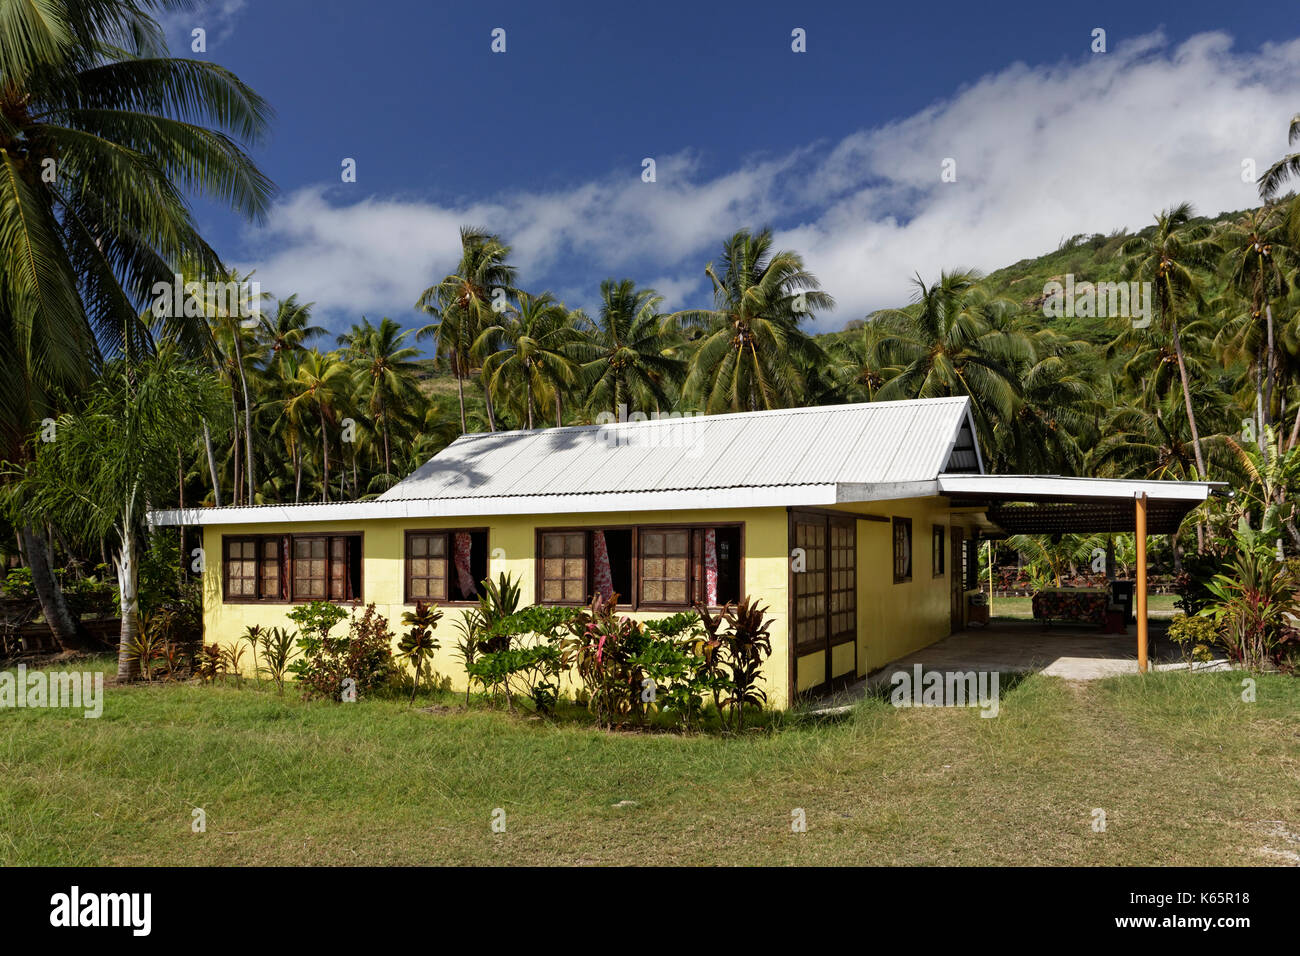 Typical house, island, Bora Bora, Society islands, French Polynesia Stock Photo